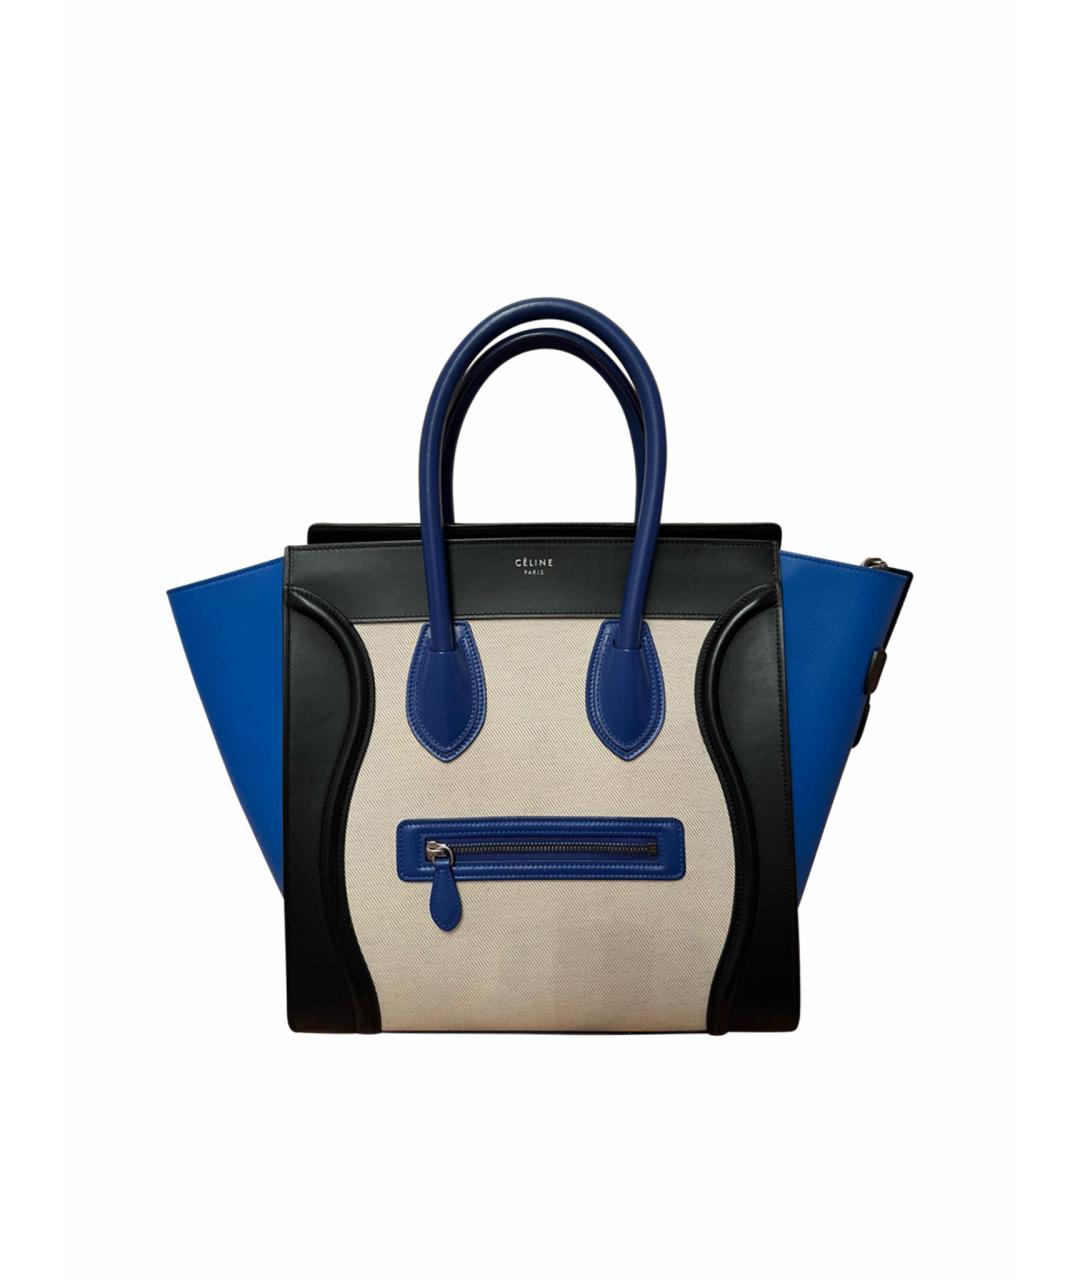 CELINE PRE-OWNED Синяя кожаная сумка с короткими ручками, фото 1